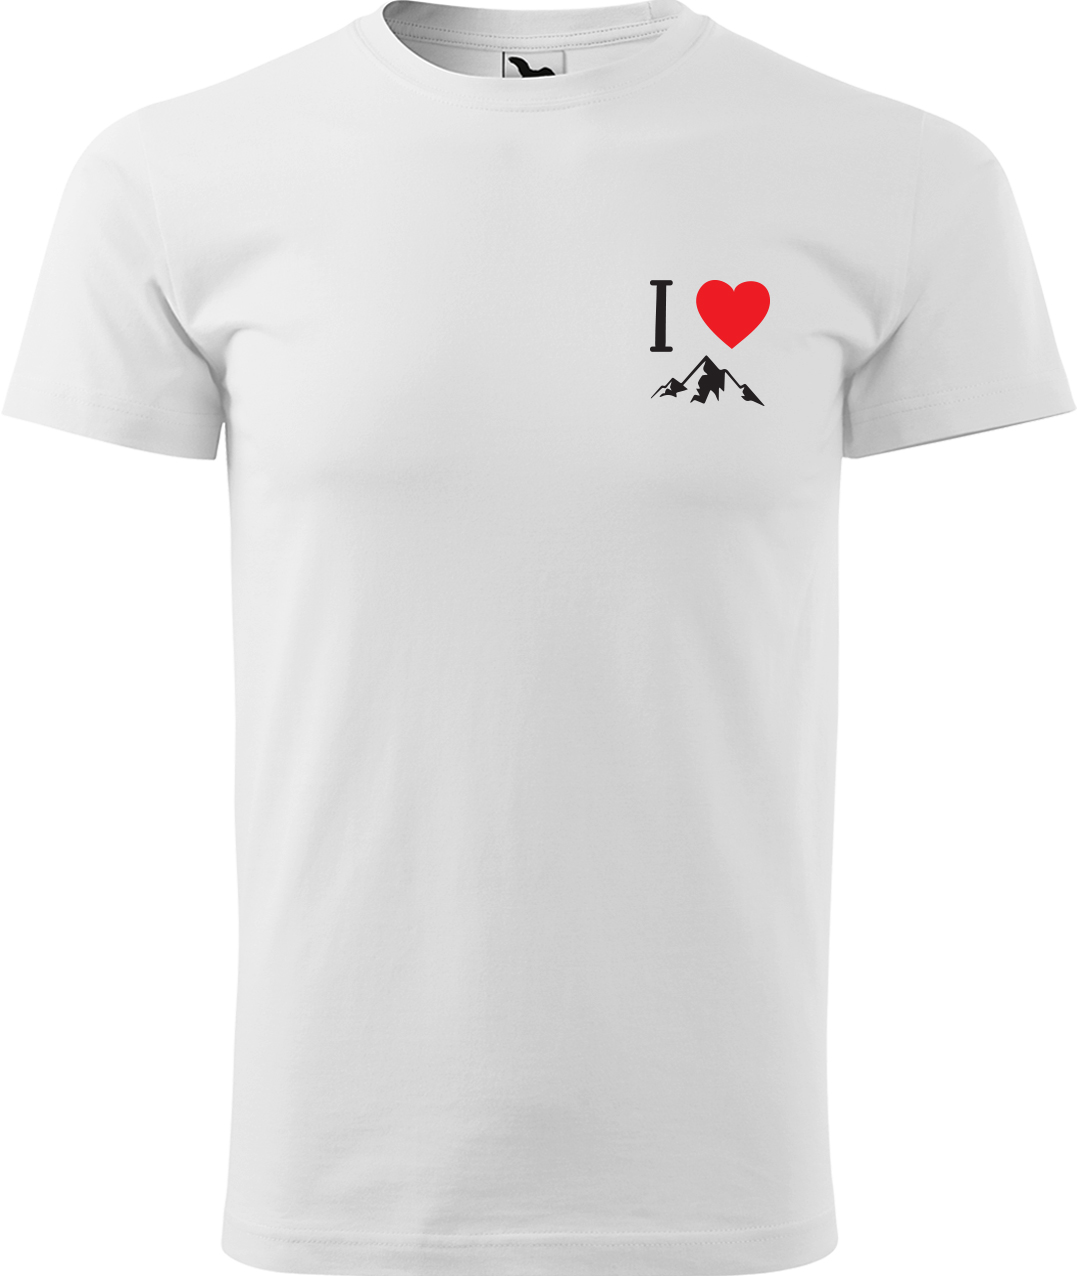 Pánské tričko na hory - I love mountain Velikost: XL, Barva: Bílá (00), Střih: pánský